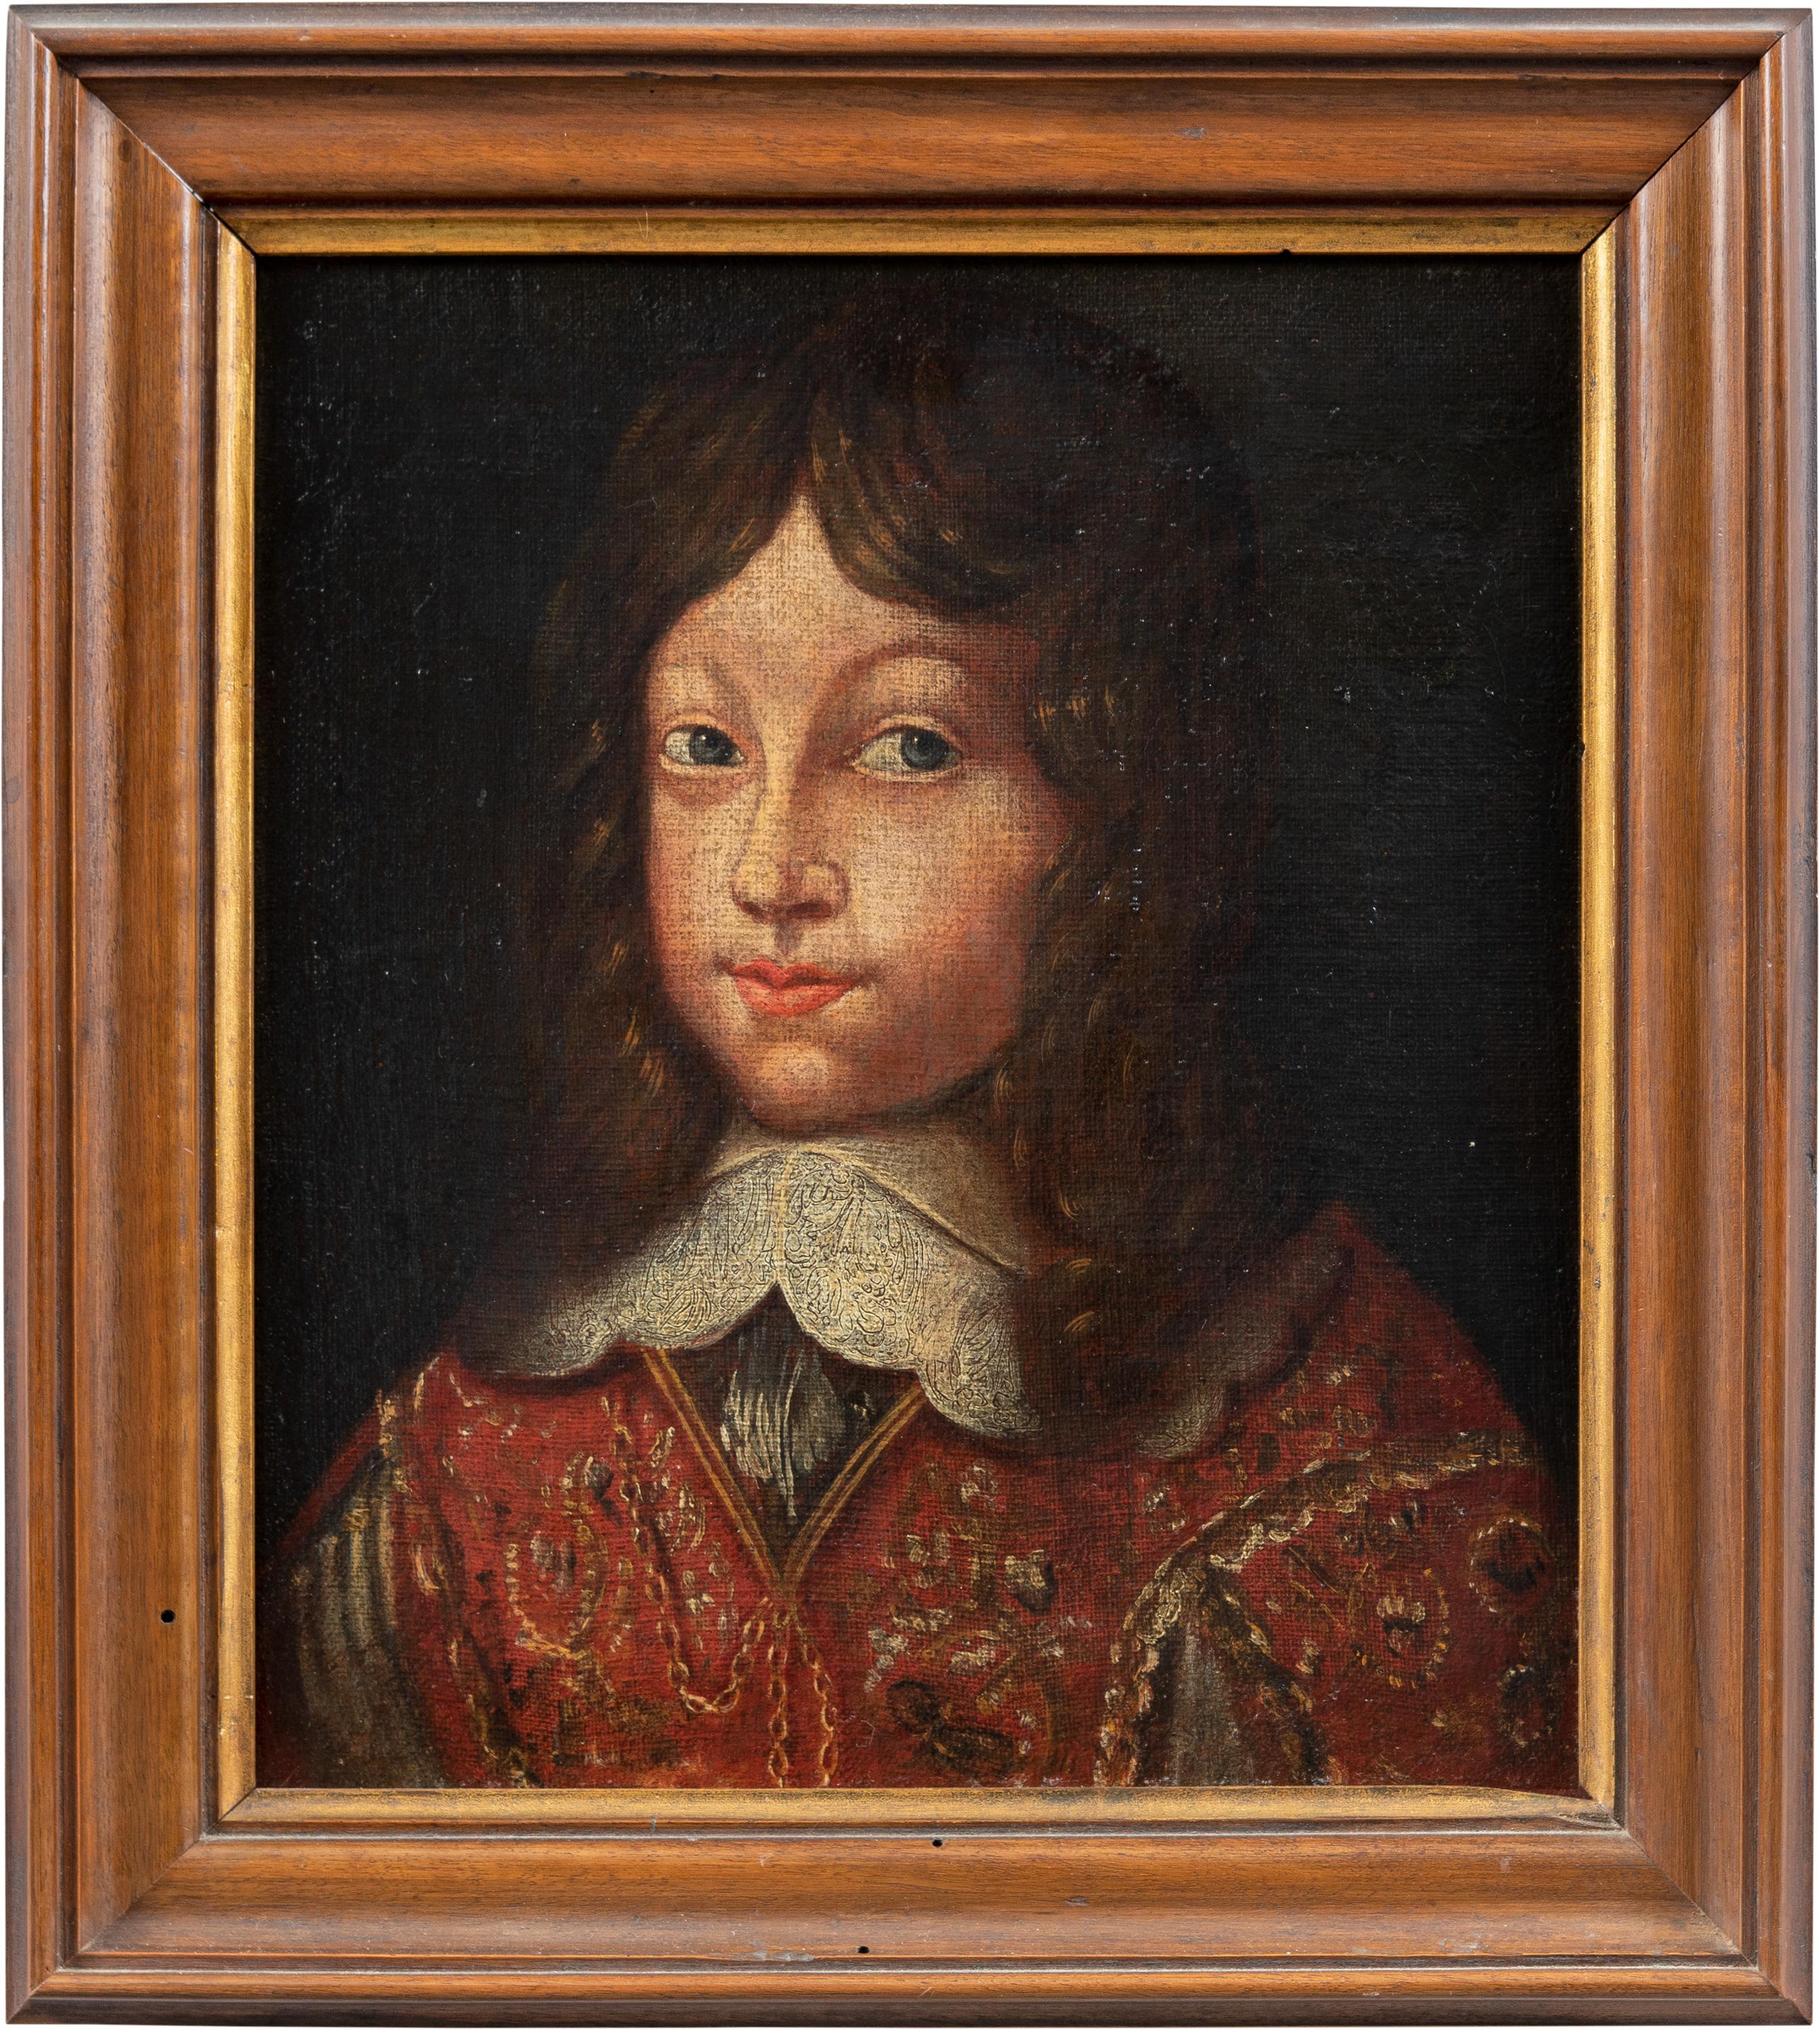 Portrait painter (Italian school) - 18th century figure painting - Young Price